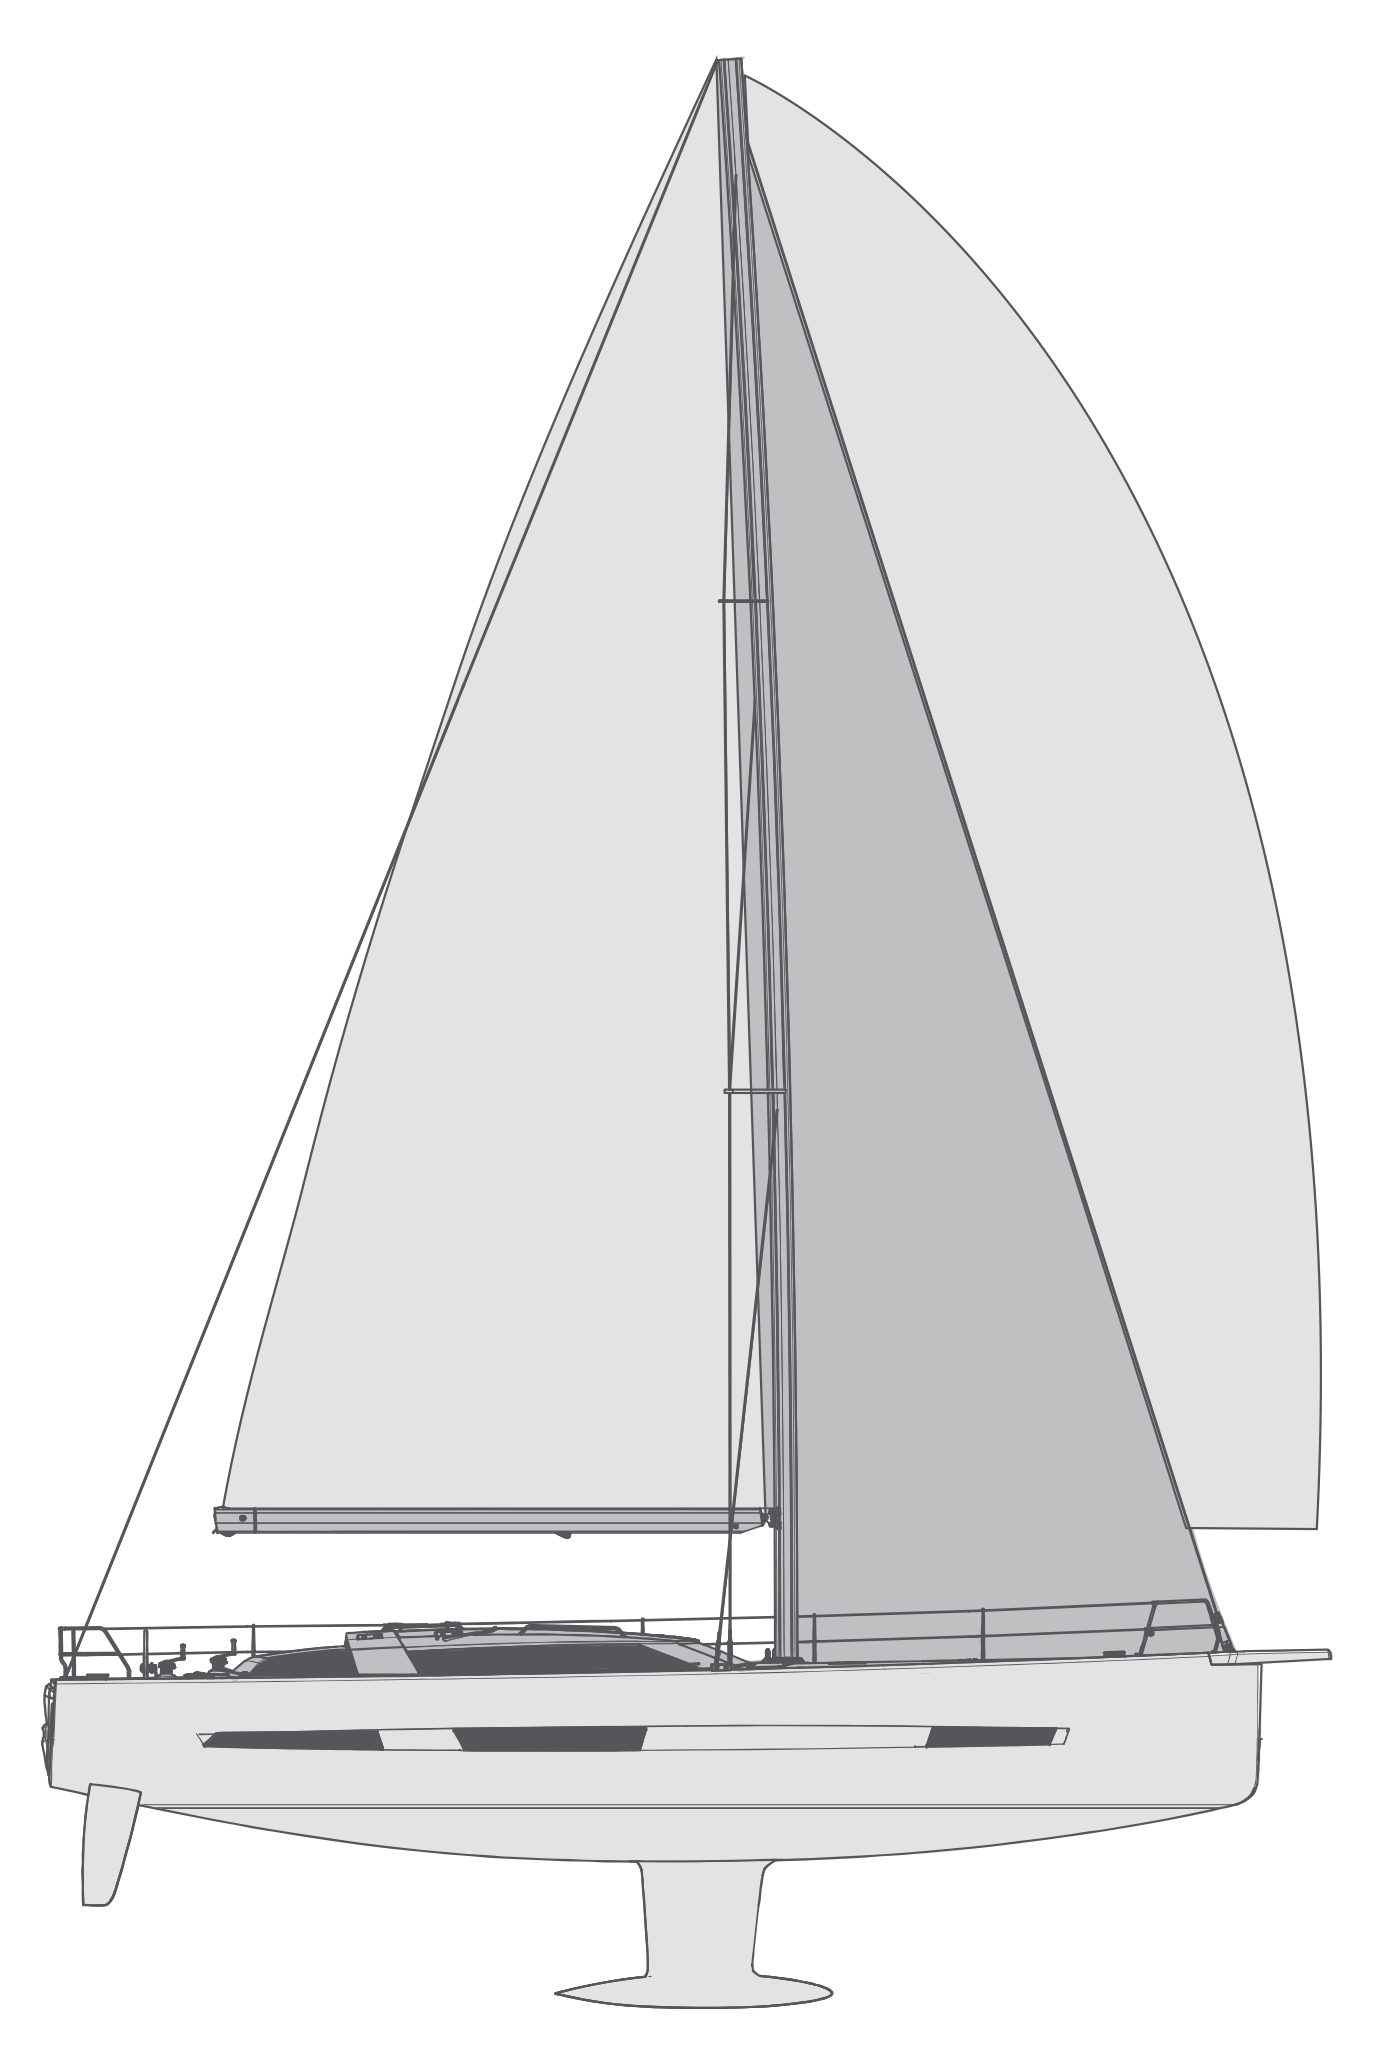 Elan Yachts Elan GT6 technical side view and sail plan